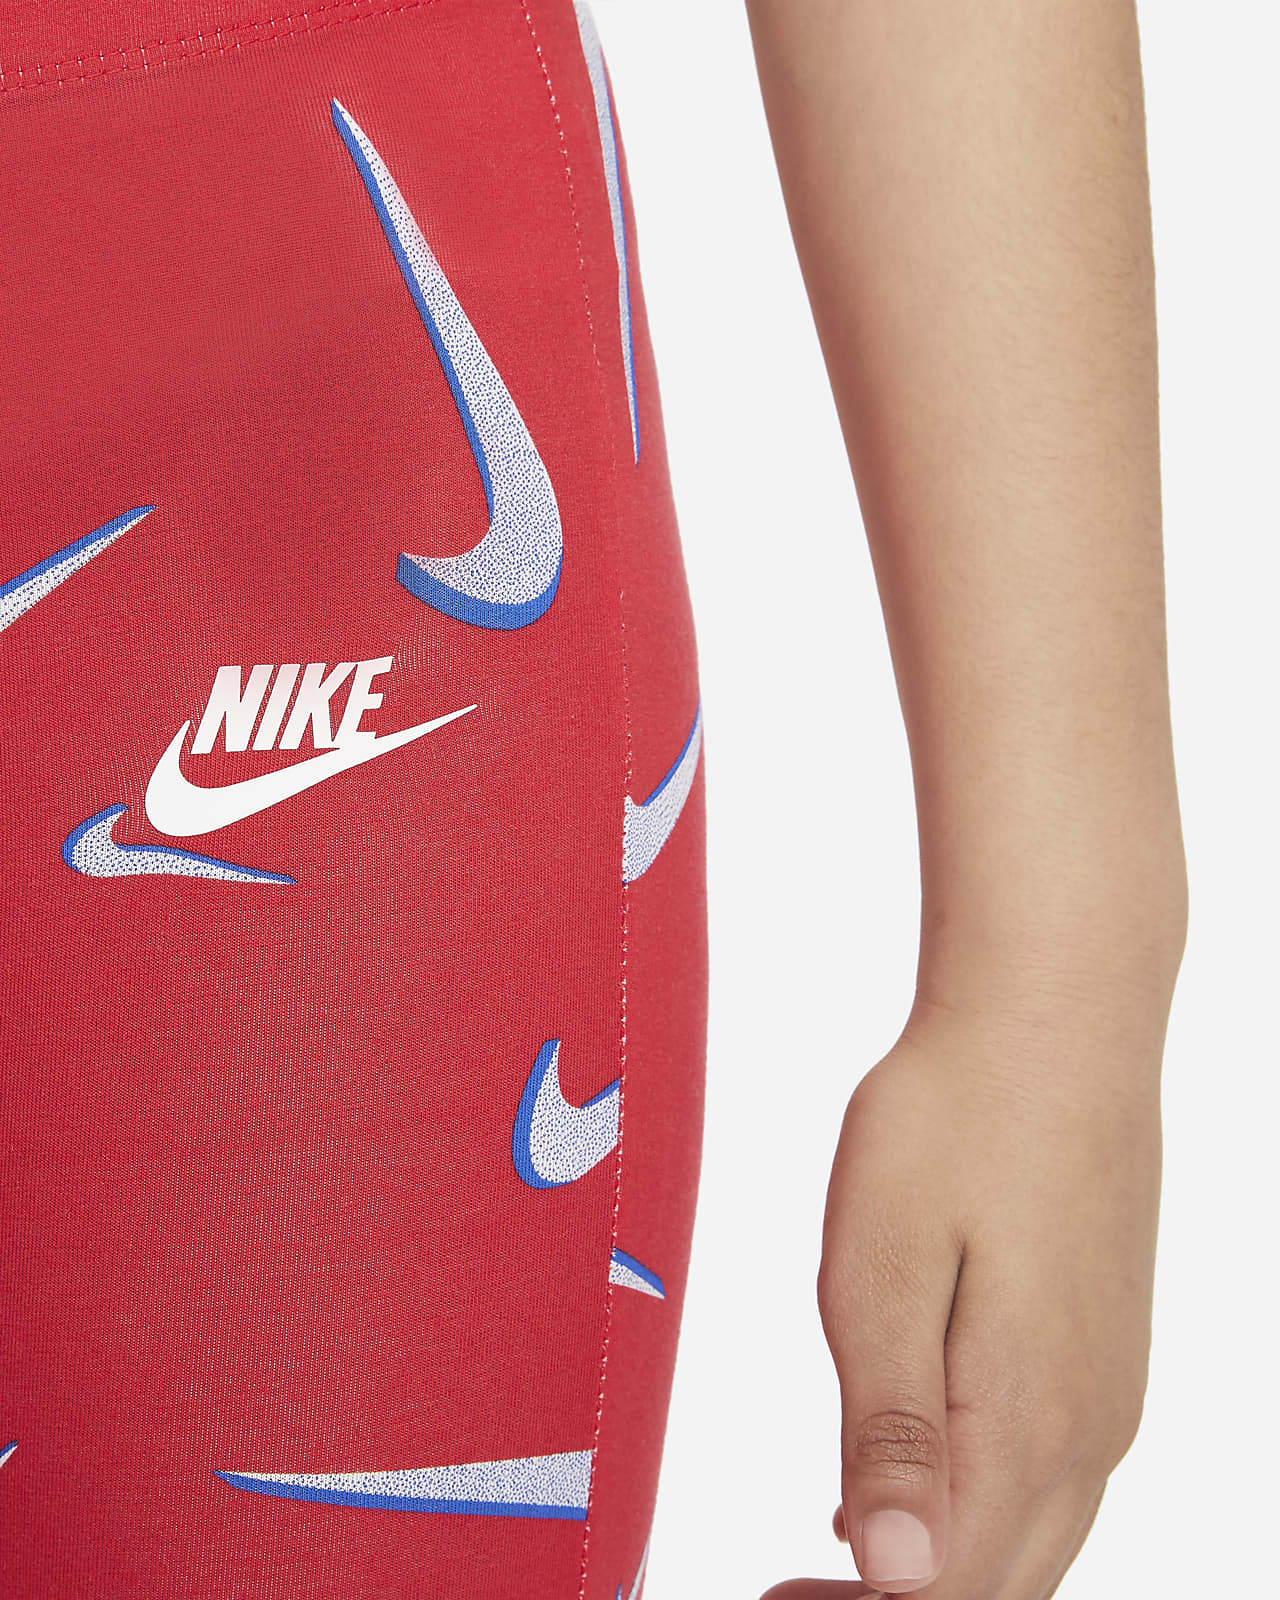 Leggings. Big Printed Nike Favorites Sportswear (Girls\') Kids\'